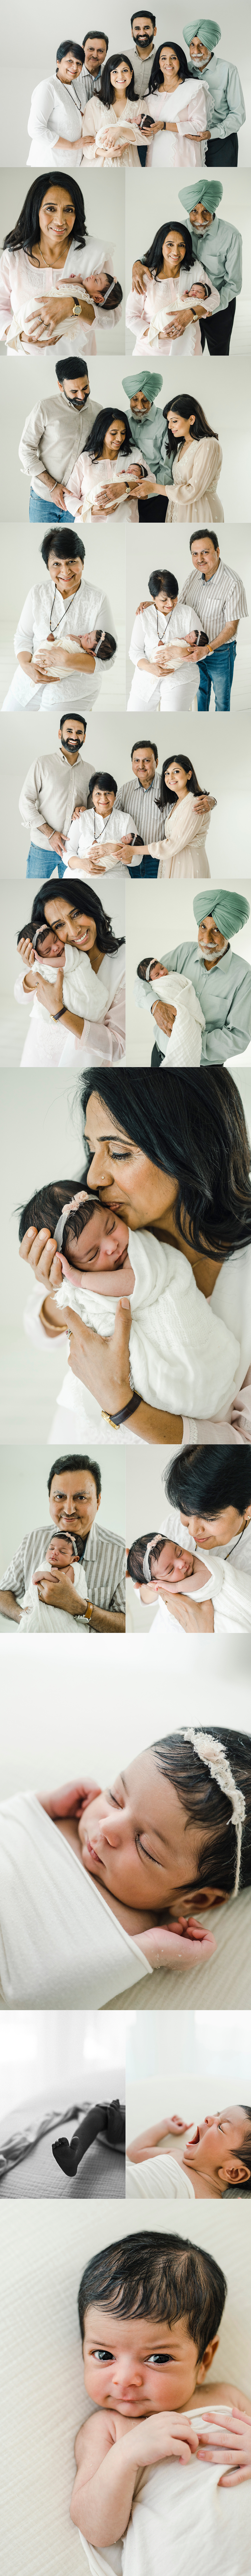 multi generational newborn portraits